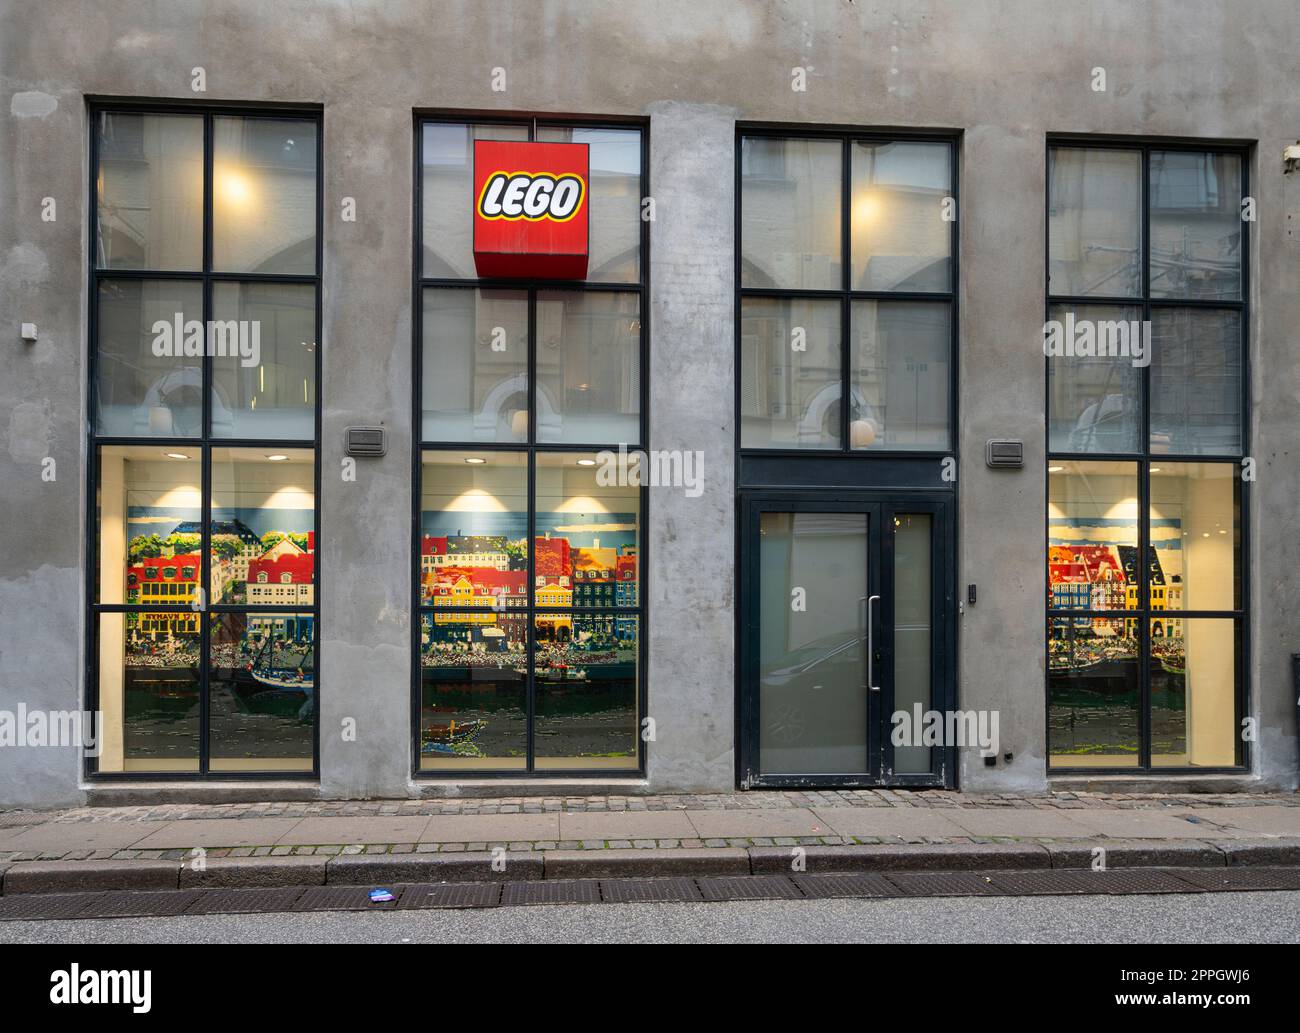 Lego brand shop in Copenhagen, Denmark Stock Photo